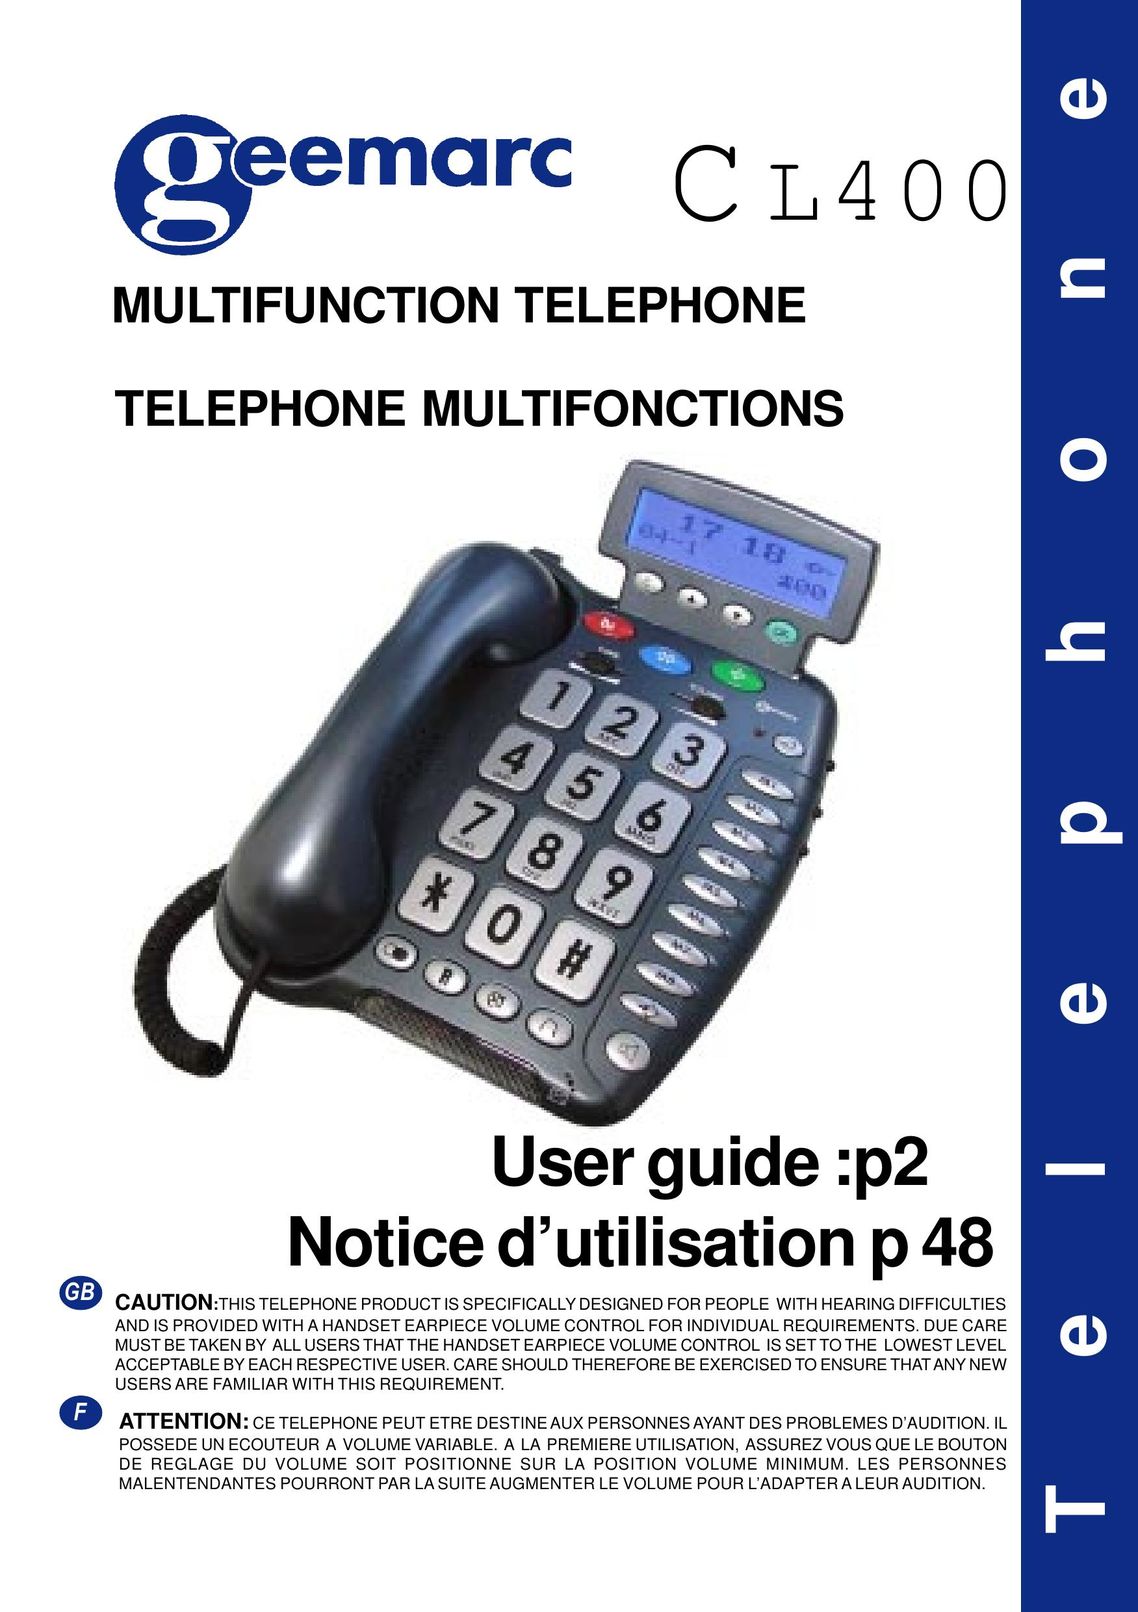 Geemarc CL400 Telephone User Manual